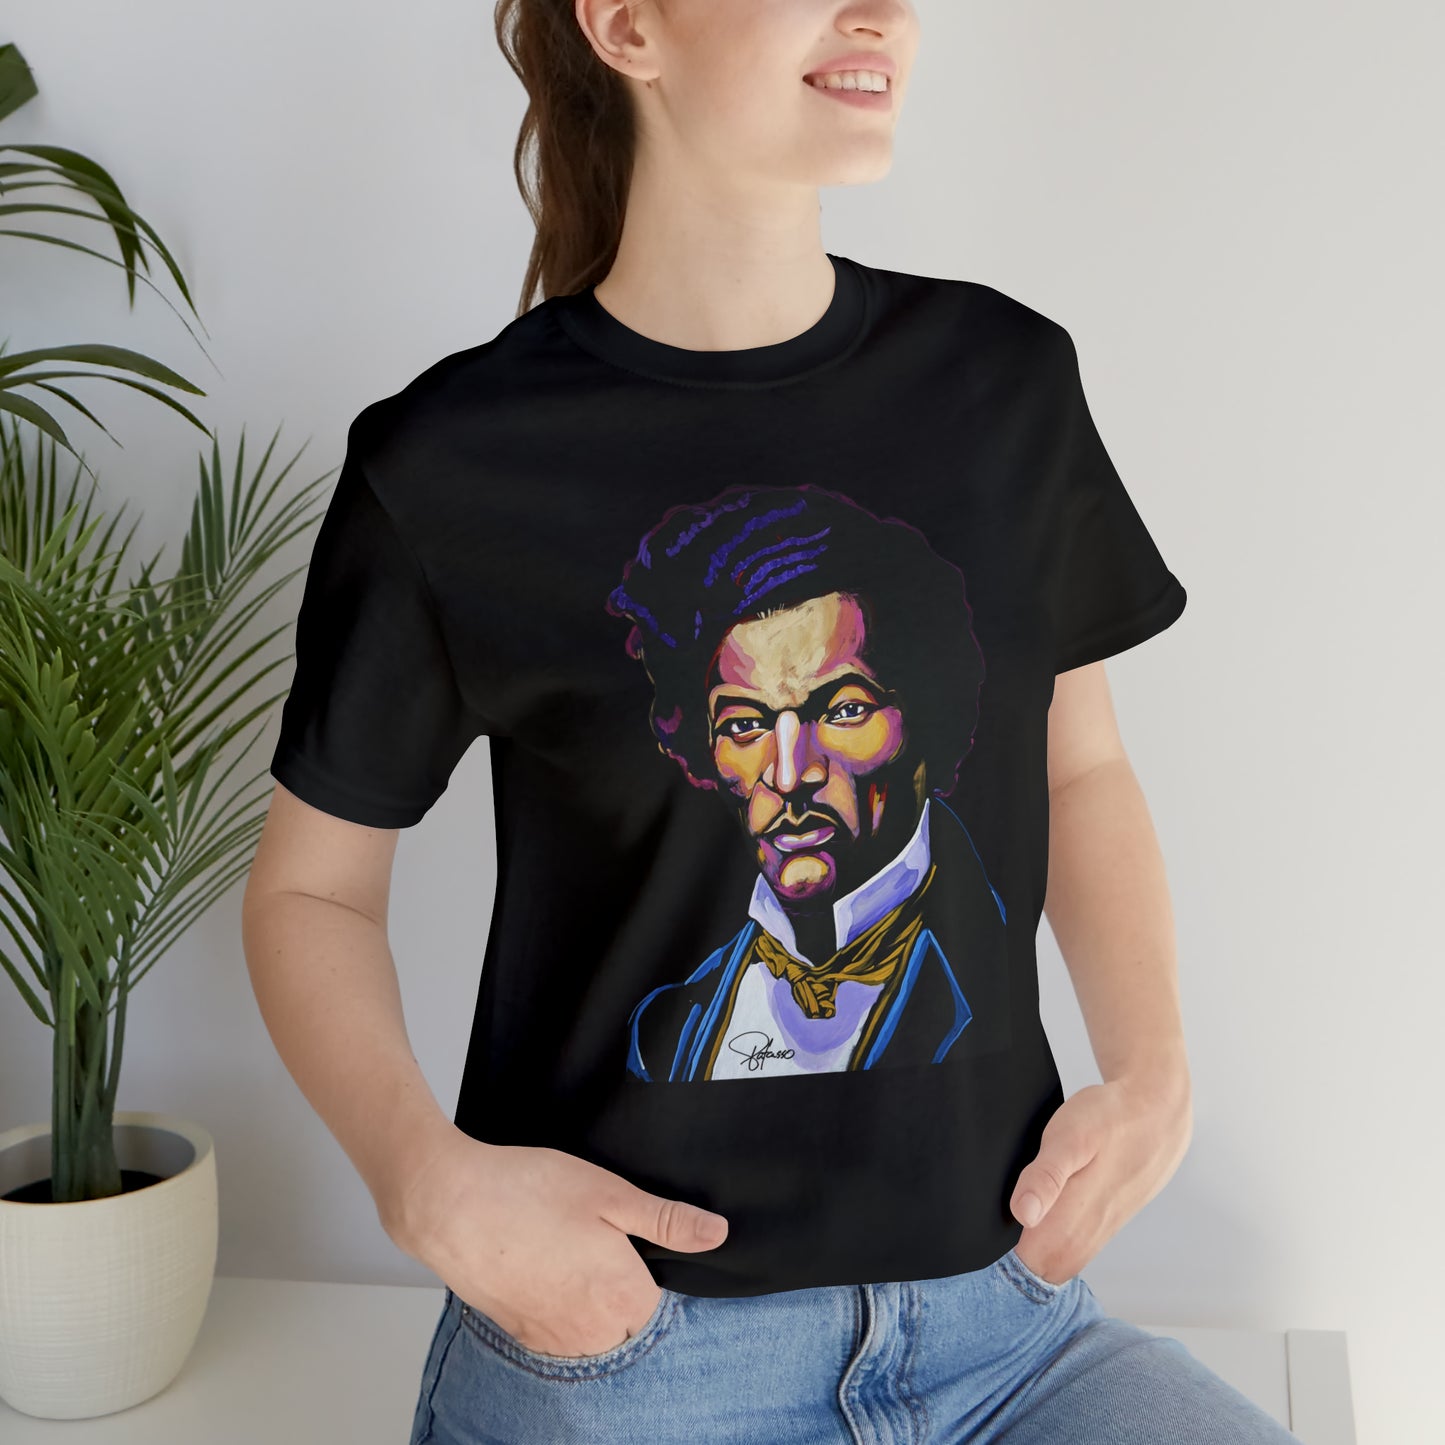 Frederick Douglass painted portrait Unisex Jersey Short Sleeve T-Shirt | Honor Black American Legends | Patcasso